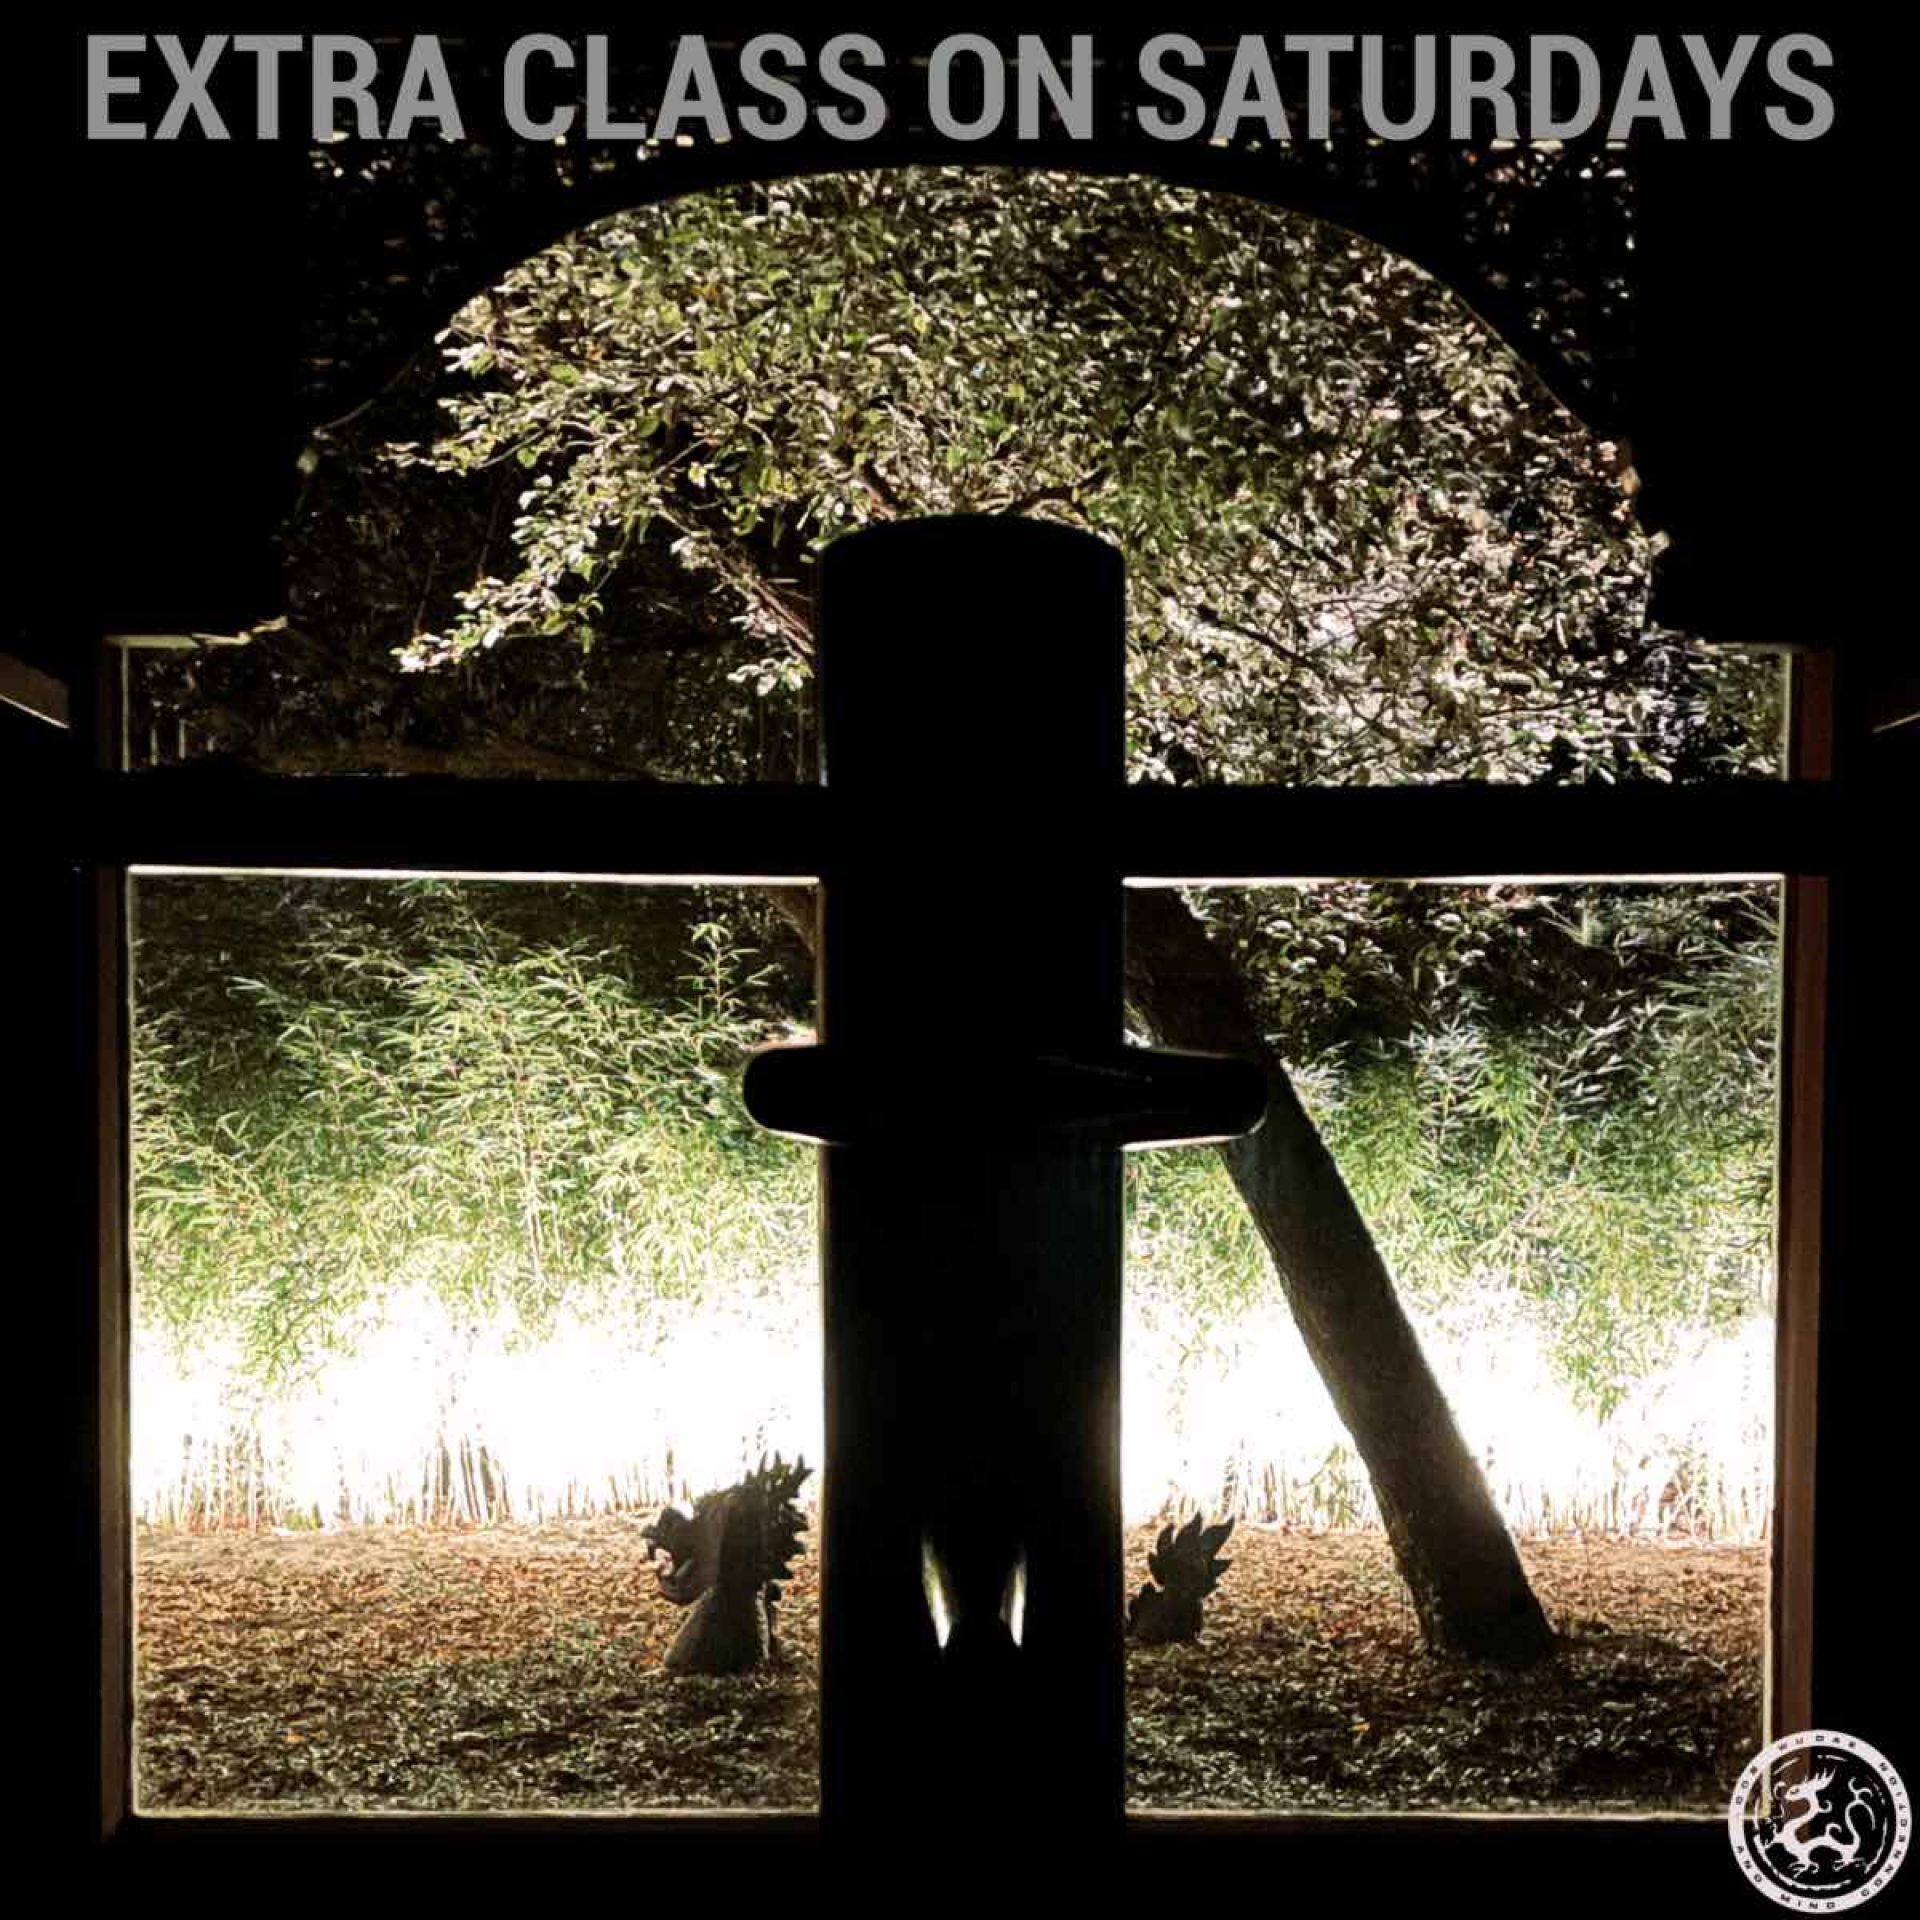 An extra class on Saturdays